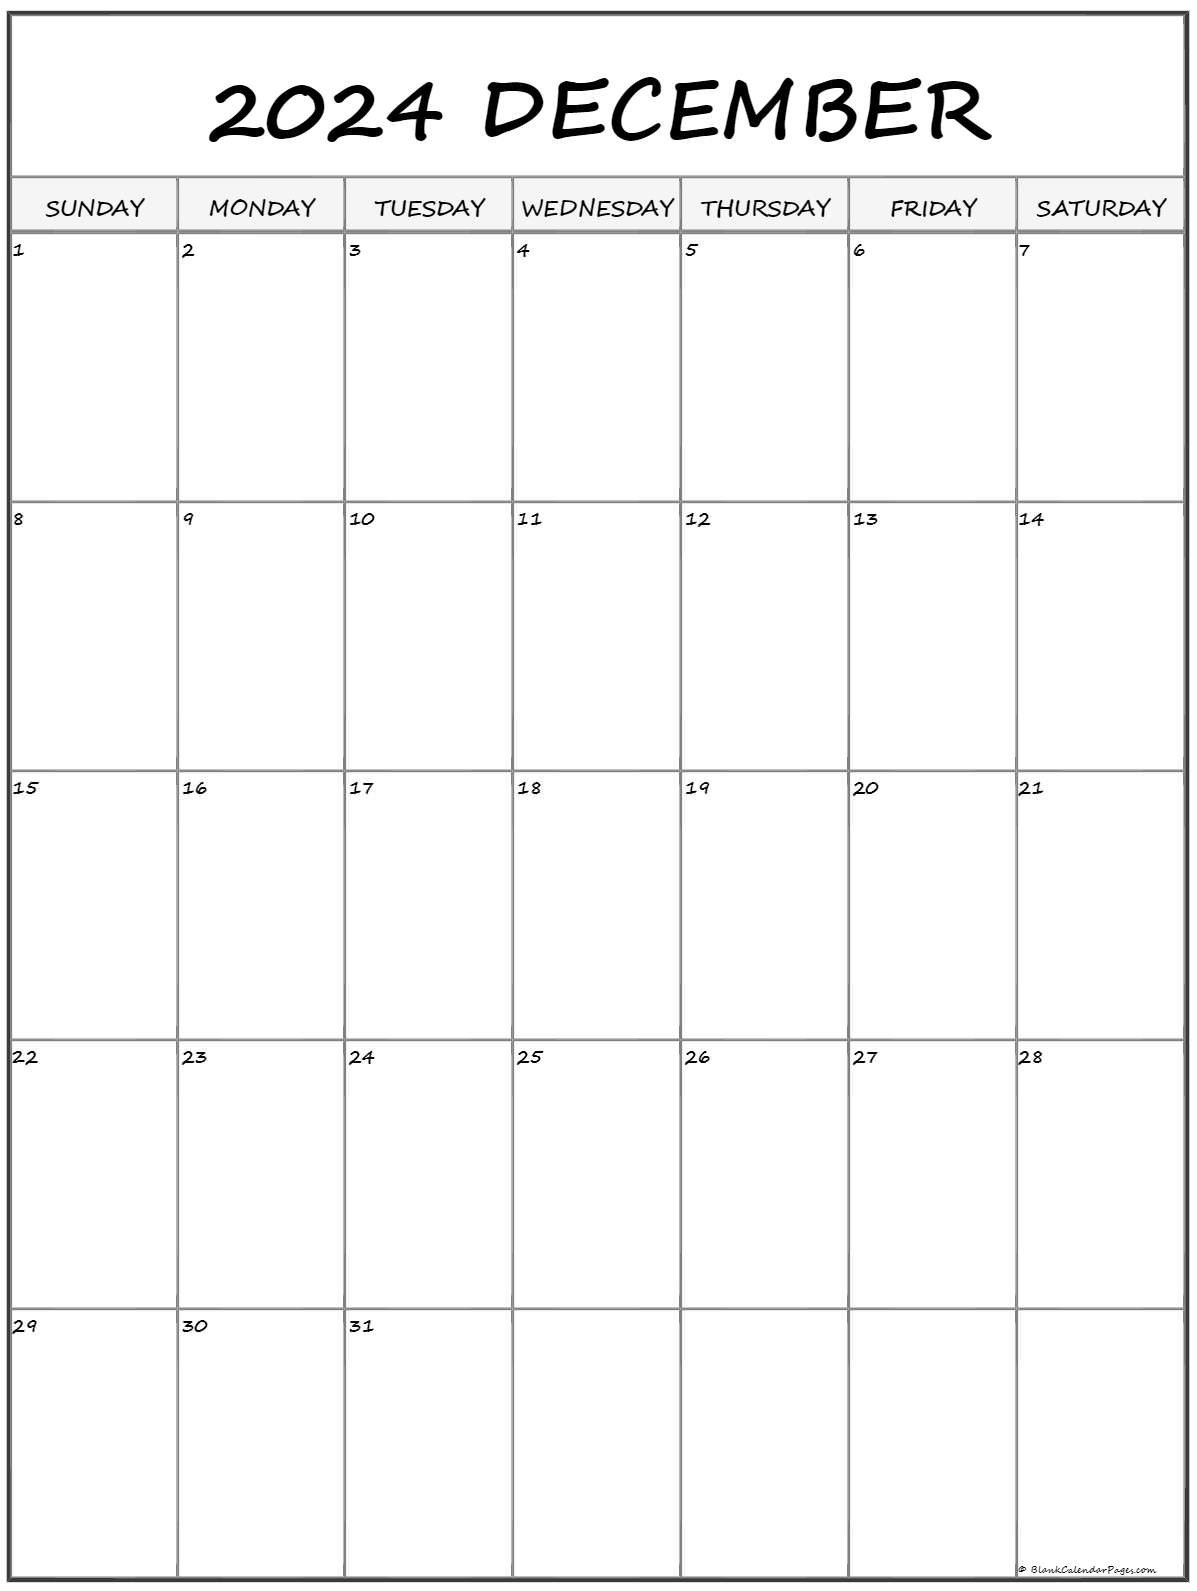 December 2024 Calendar For Printing December 2024 Calendar Free Blank